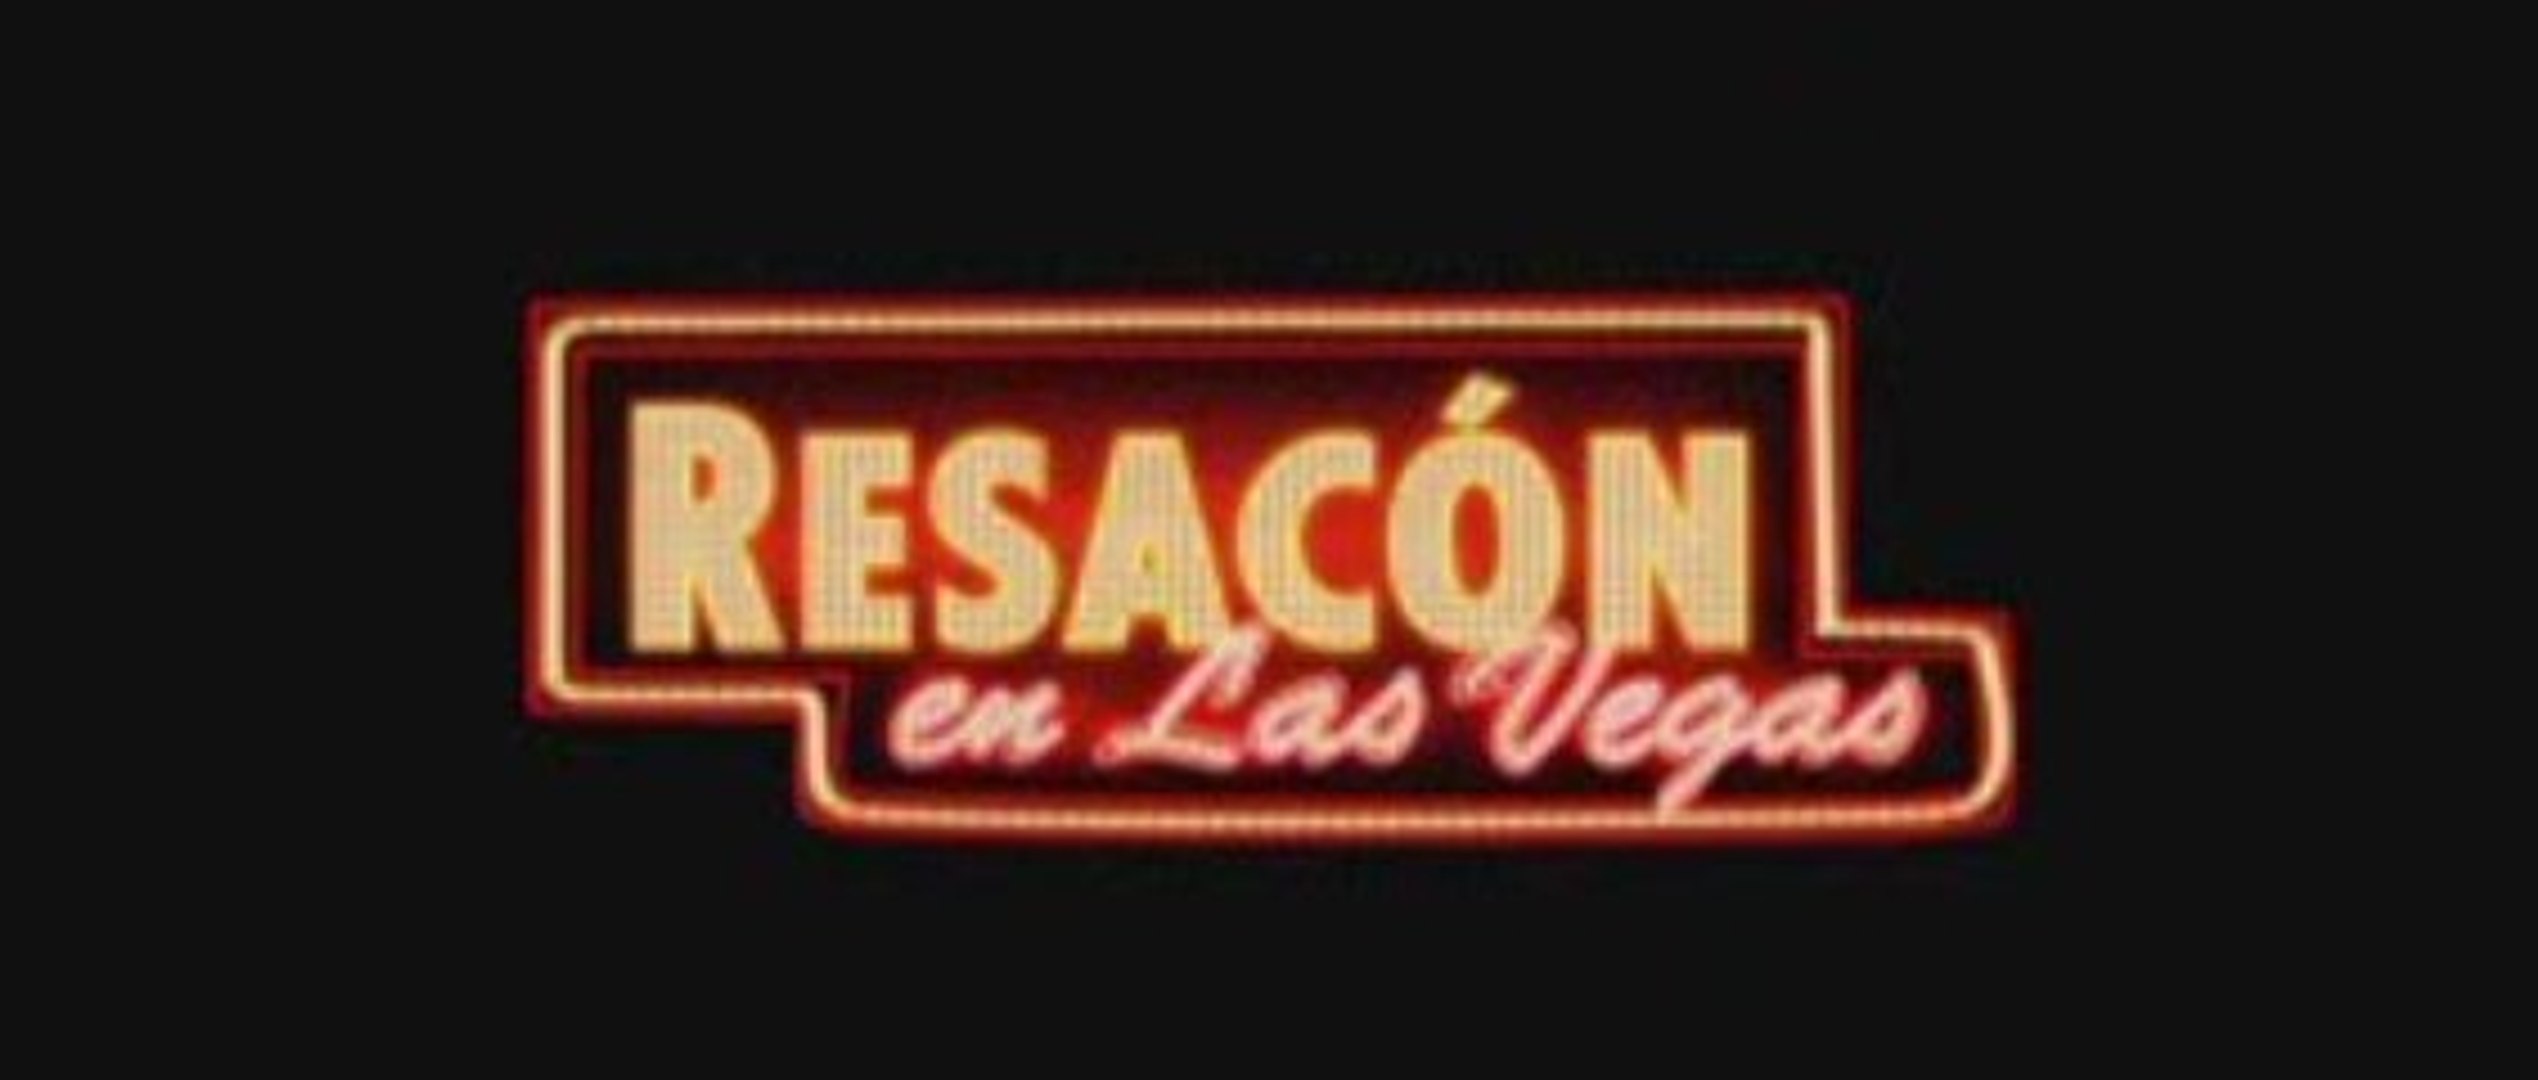 Resacon en Las Vegas Trailer Español - Vídeo Dailymotion